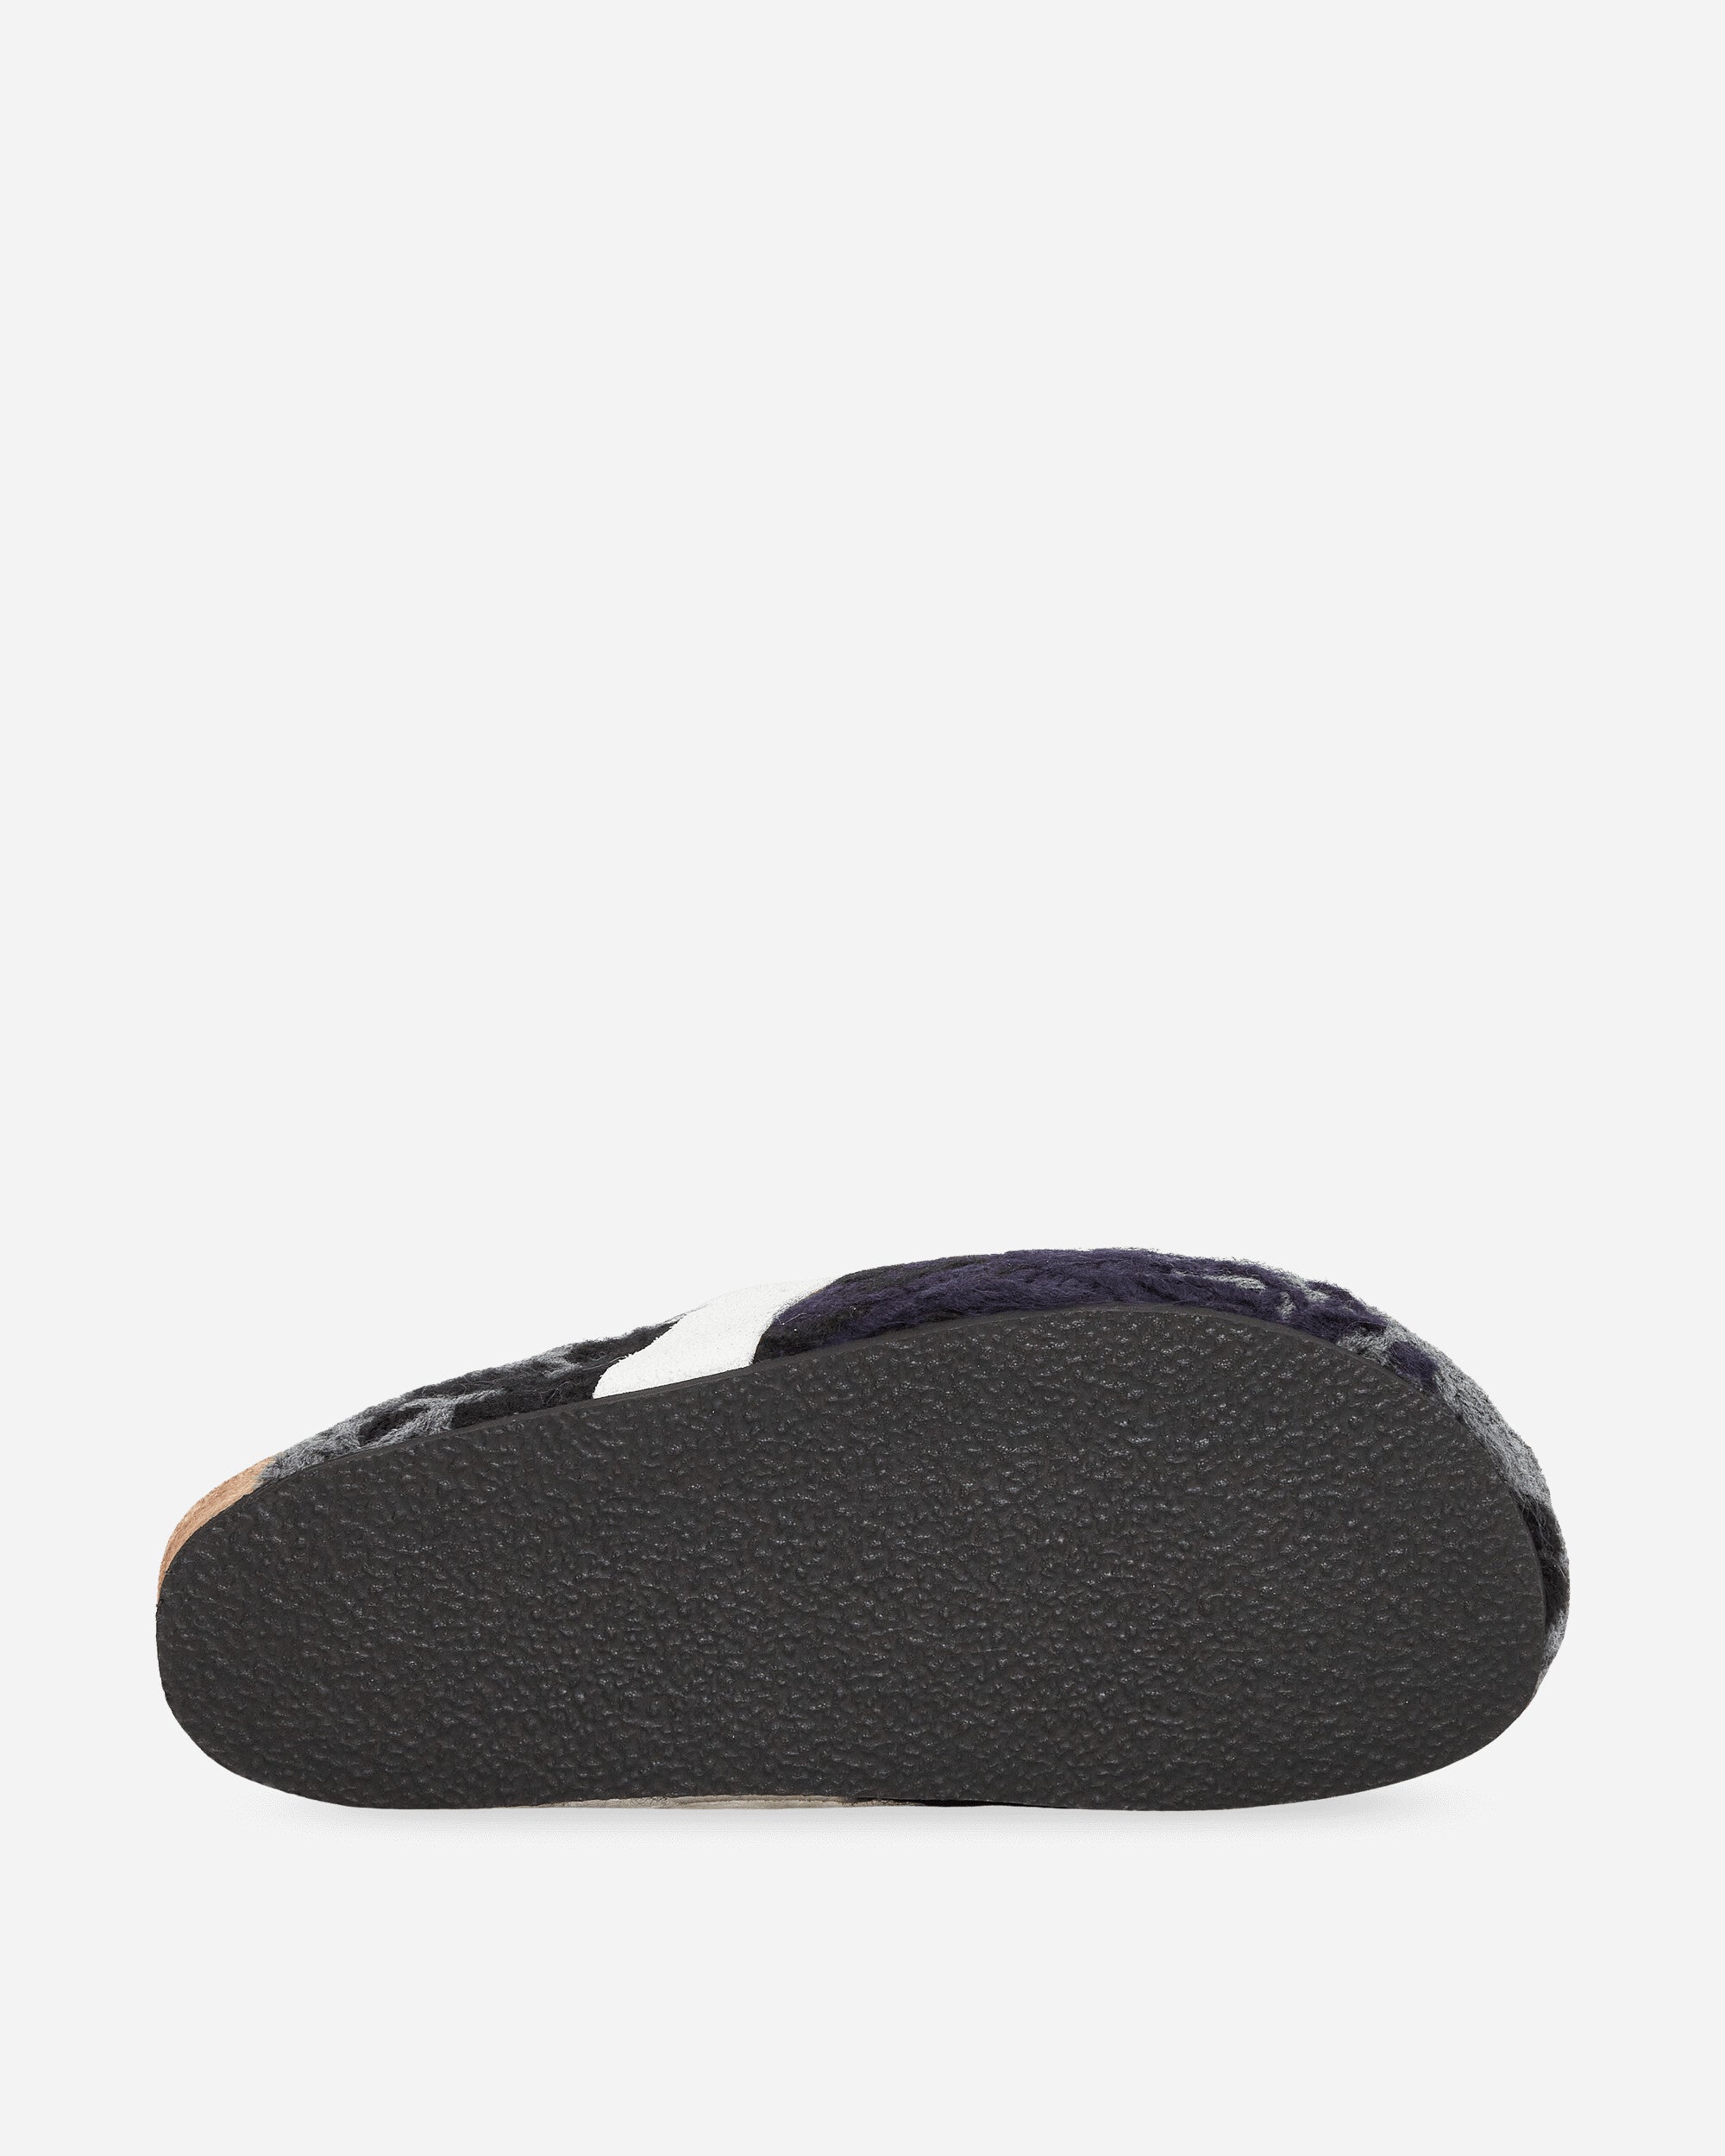 Vitelli Vitelli Clogs Black/Navy Sandals and Slides Sandals and Mules VIT057W M9